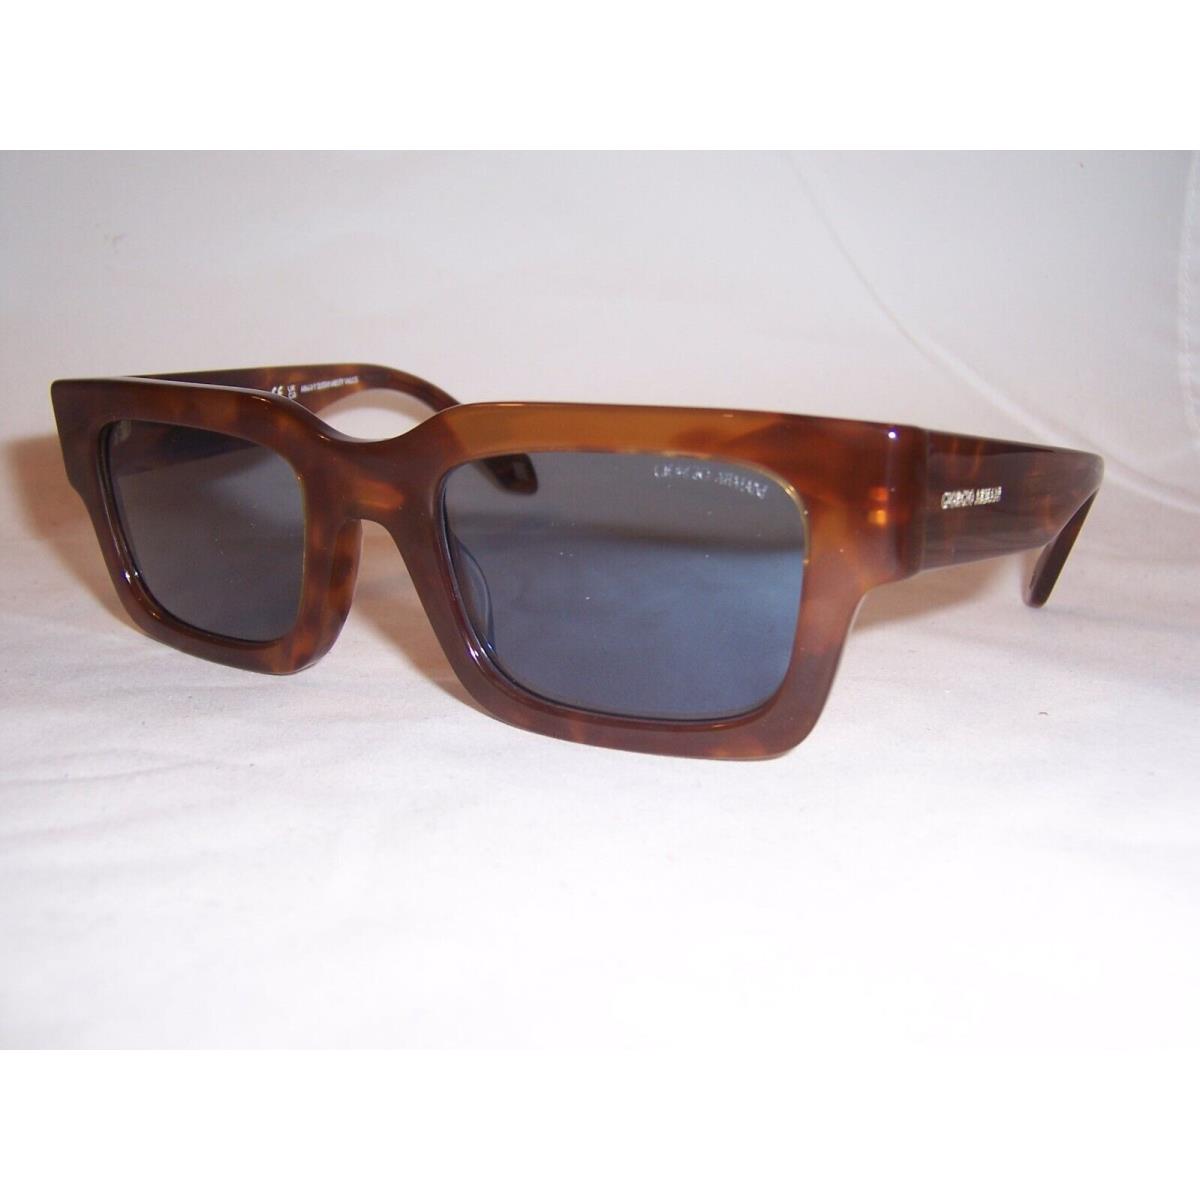 Giorgio Armani sunglasses  - Red Havana Frame, White Lens 2